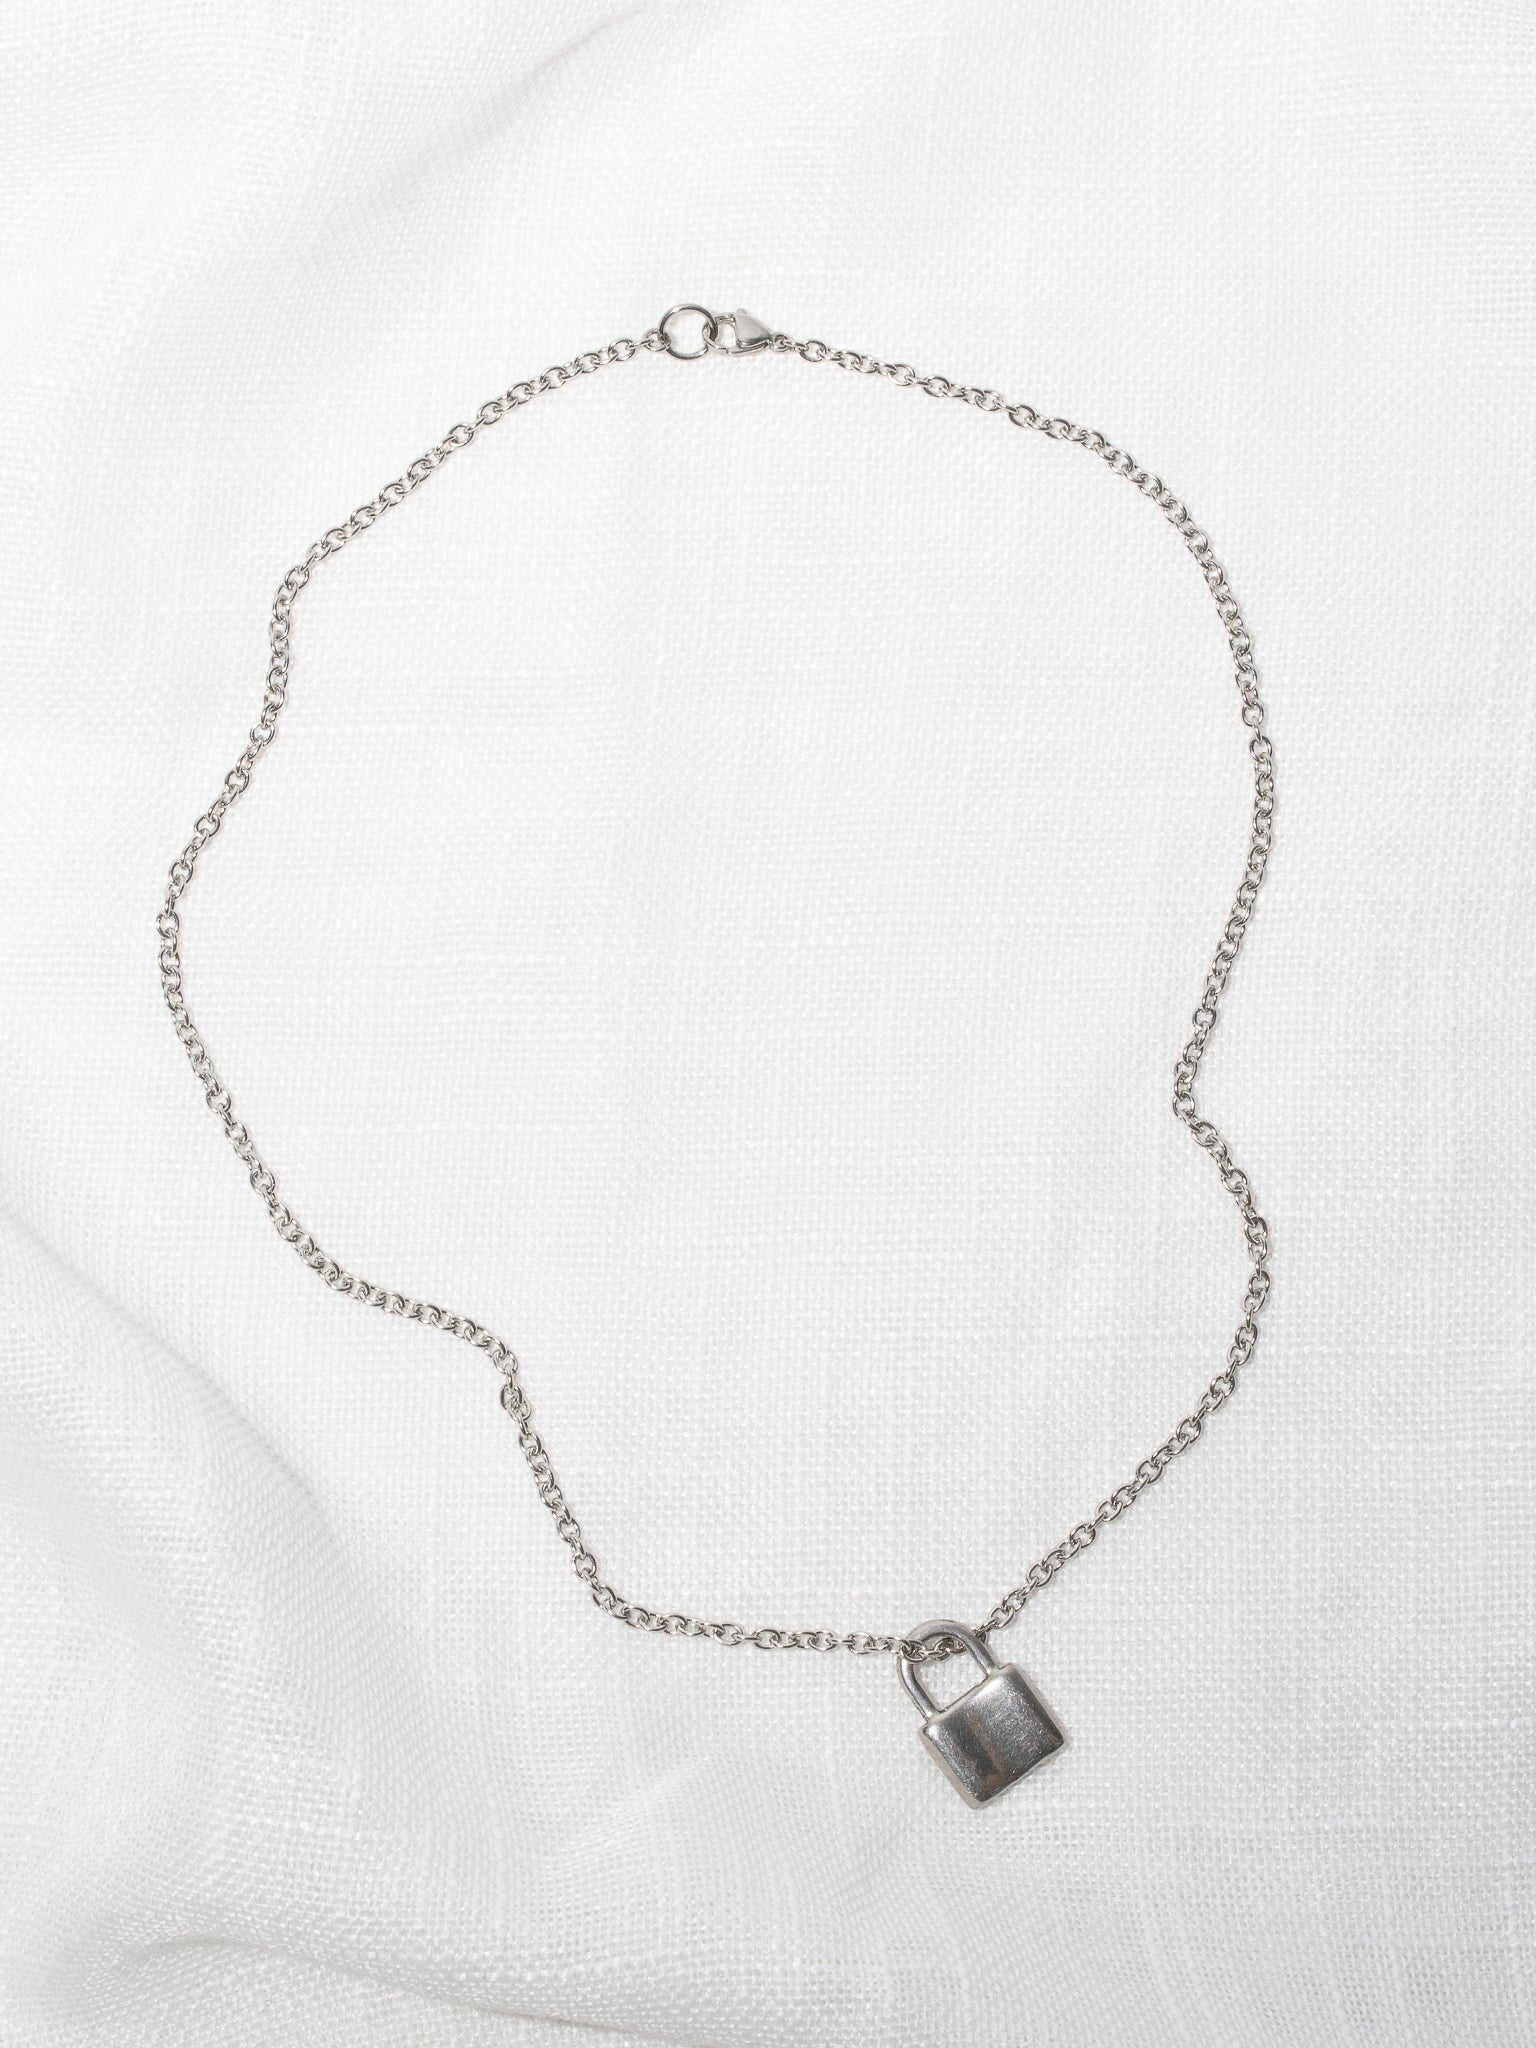 Shop Journal - Silver Locket Necklace